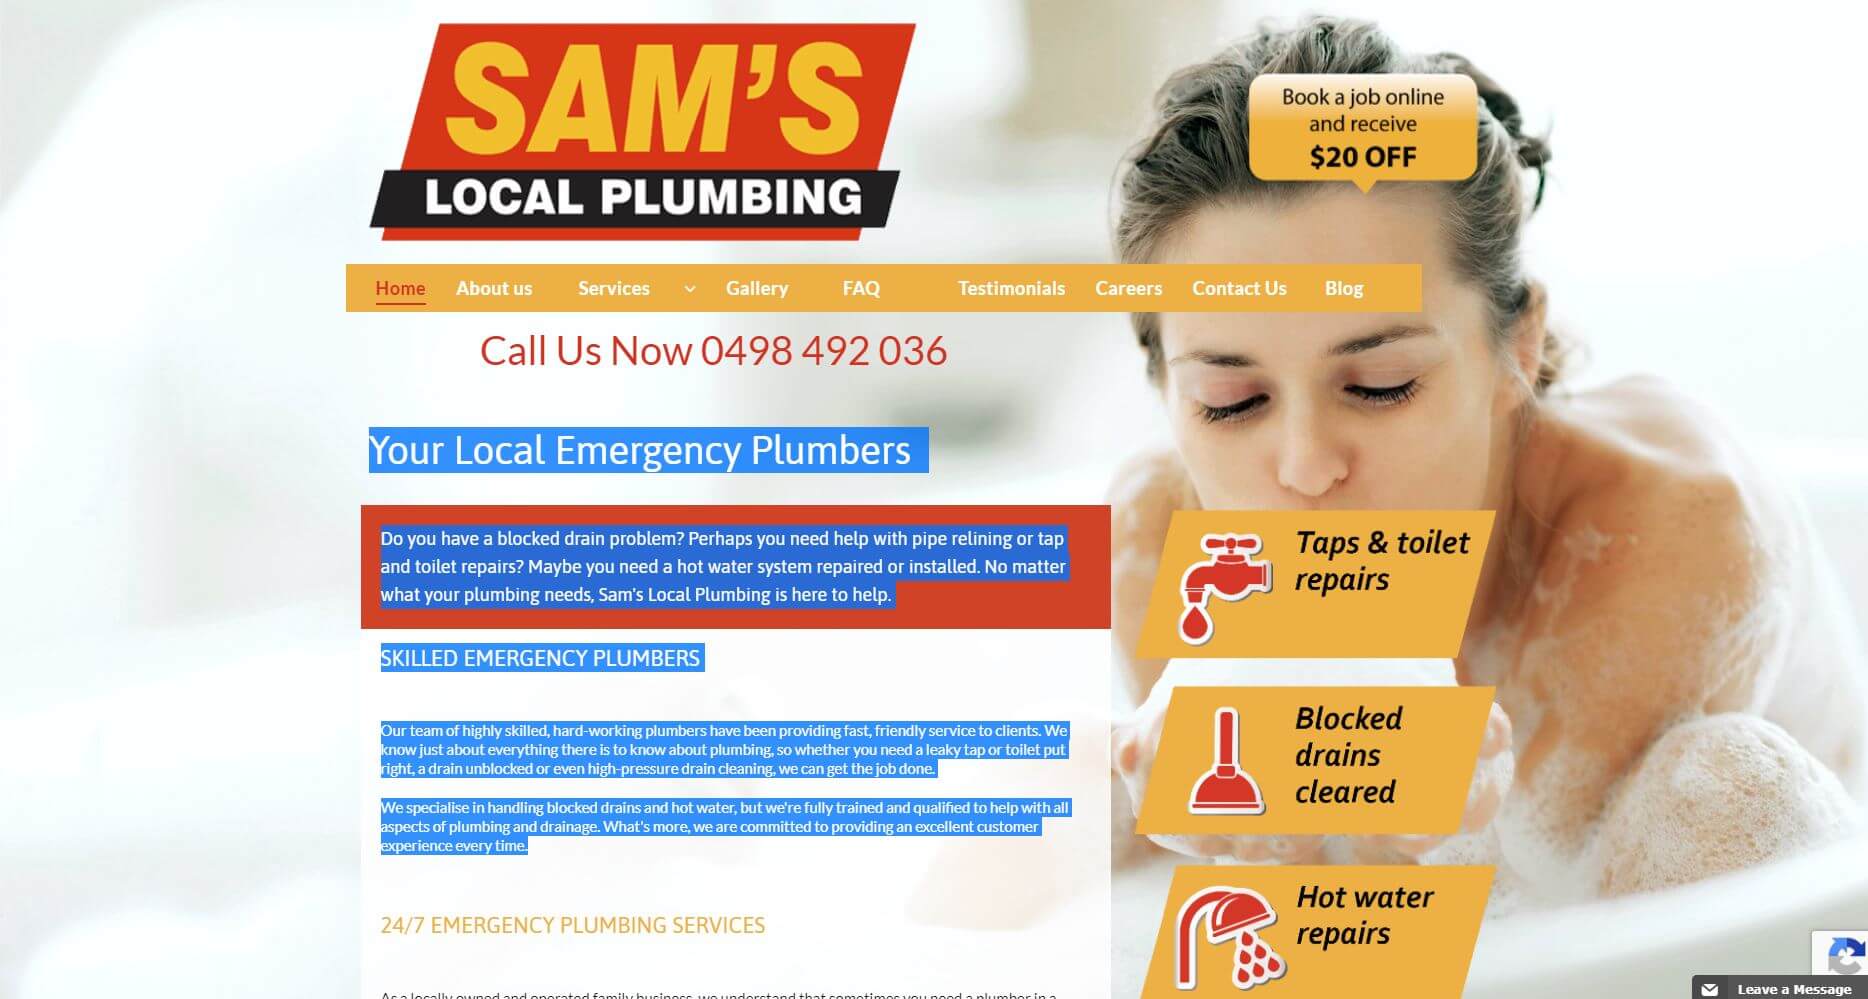 Sam's Local Plumbing